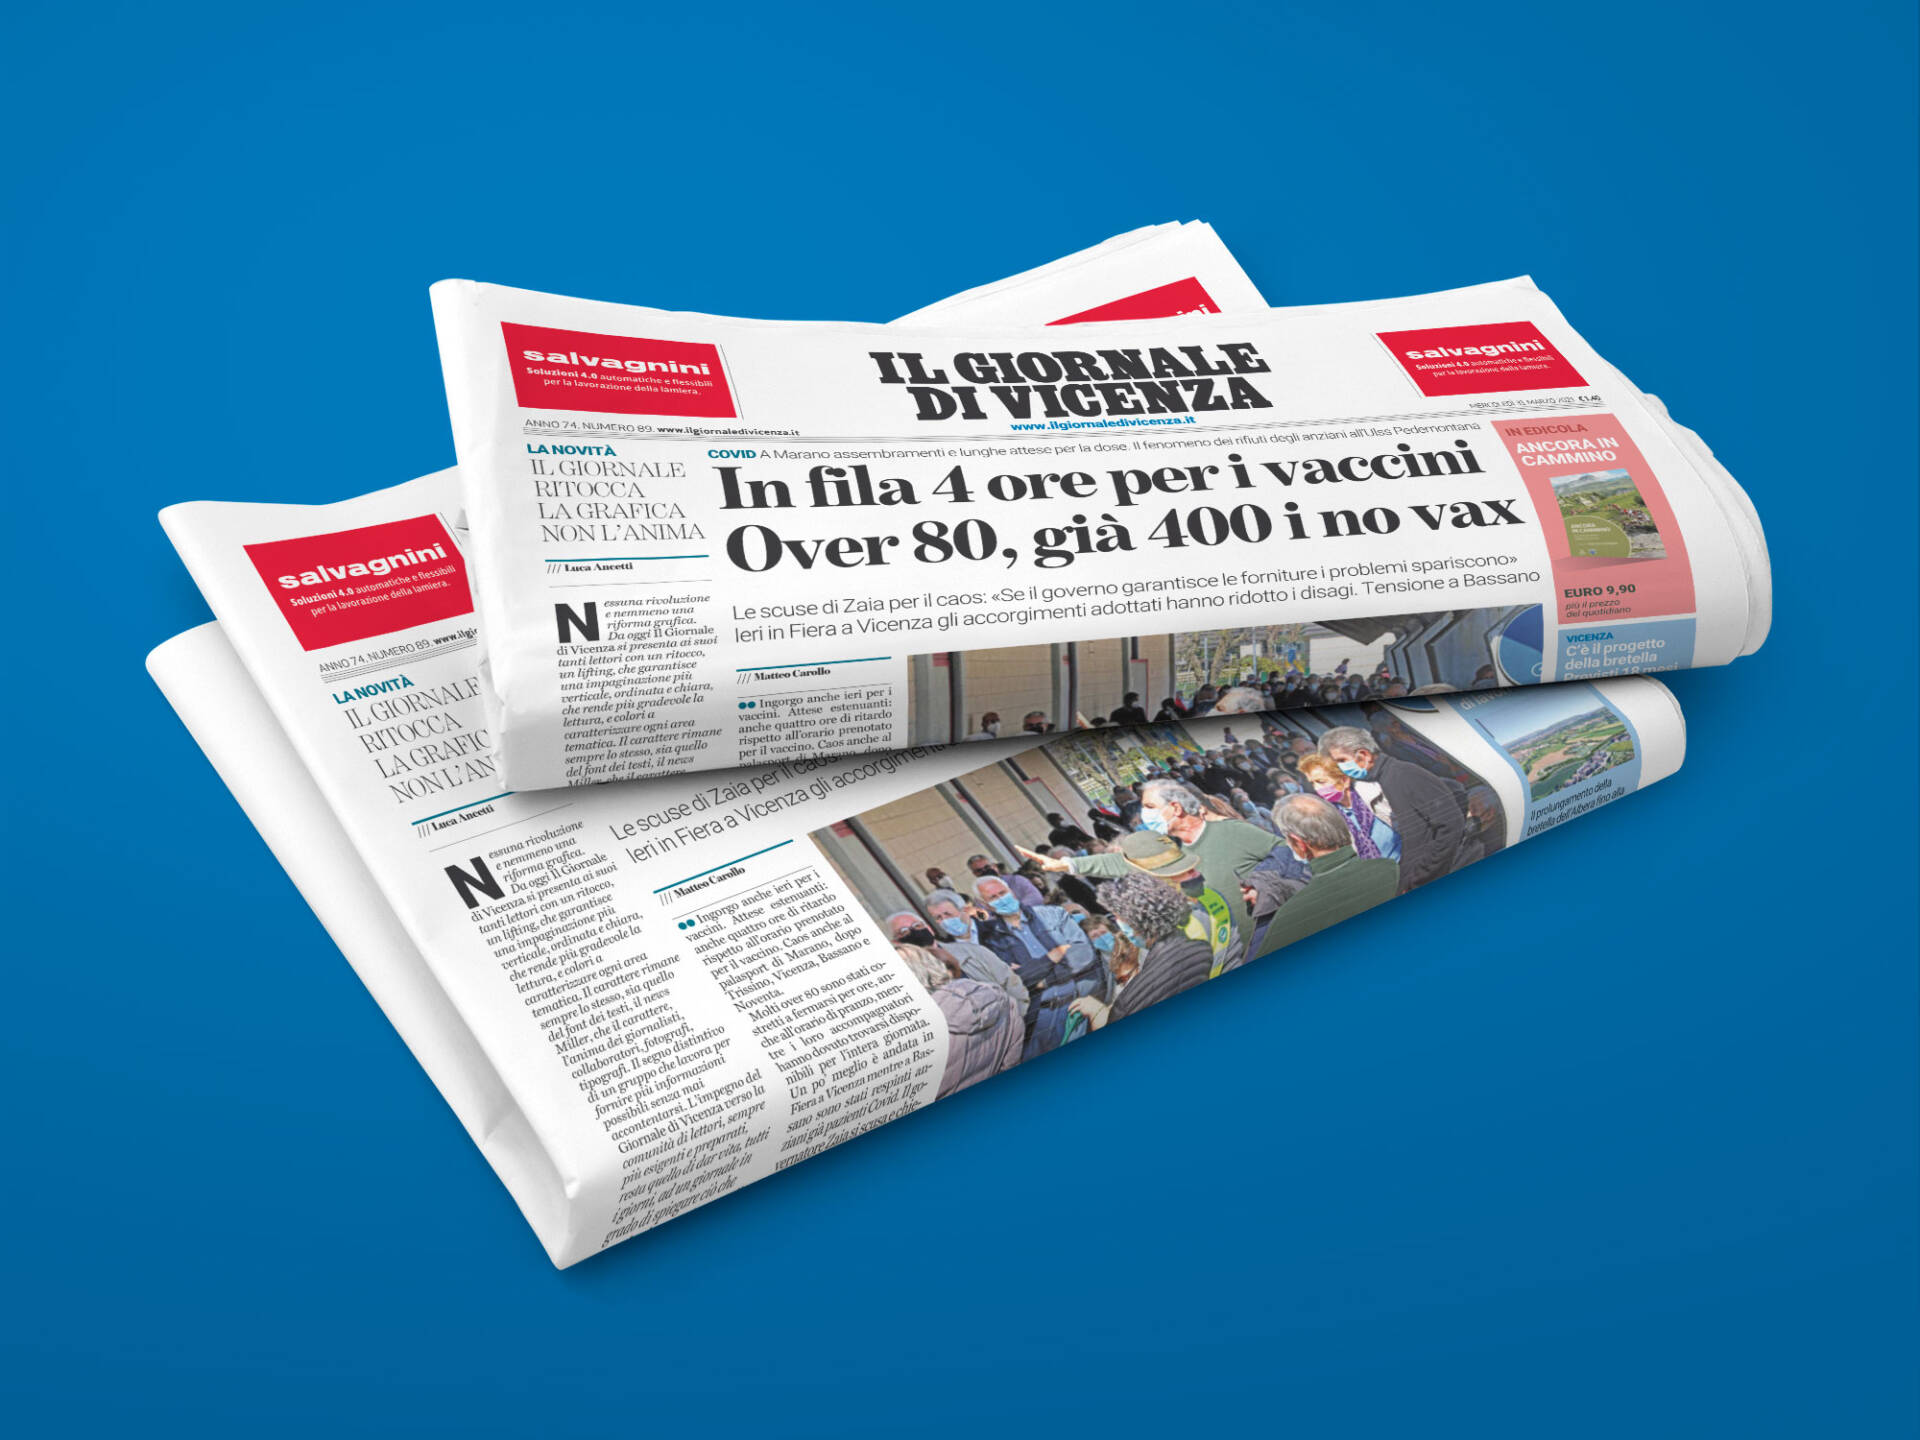 Il-Gionrale-Di-Vicenza-01-Wenceslau-News-Design-2021